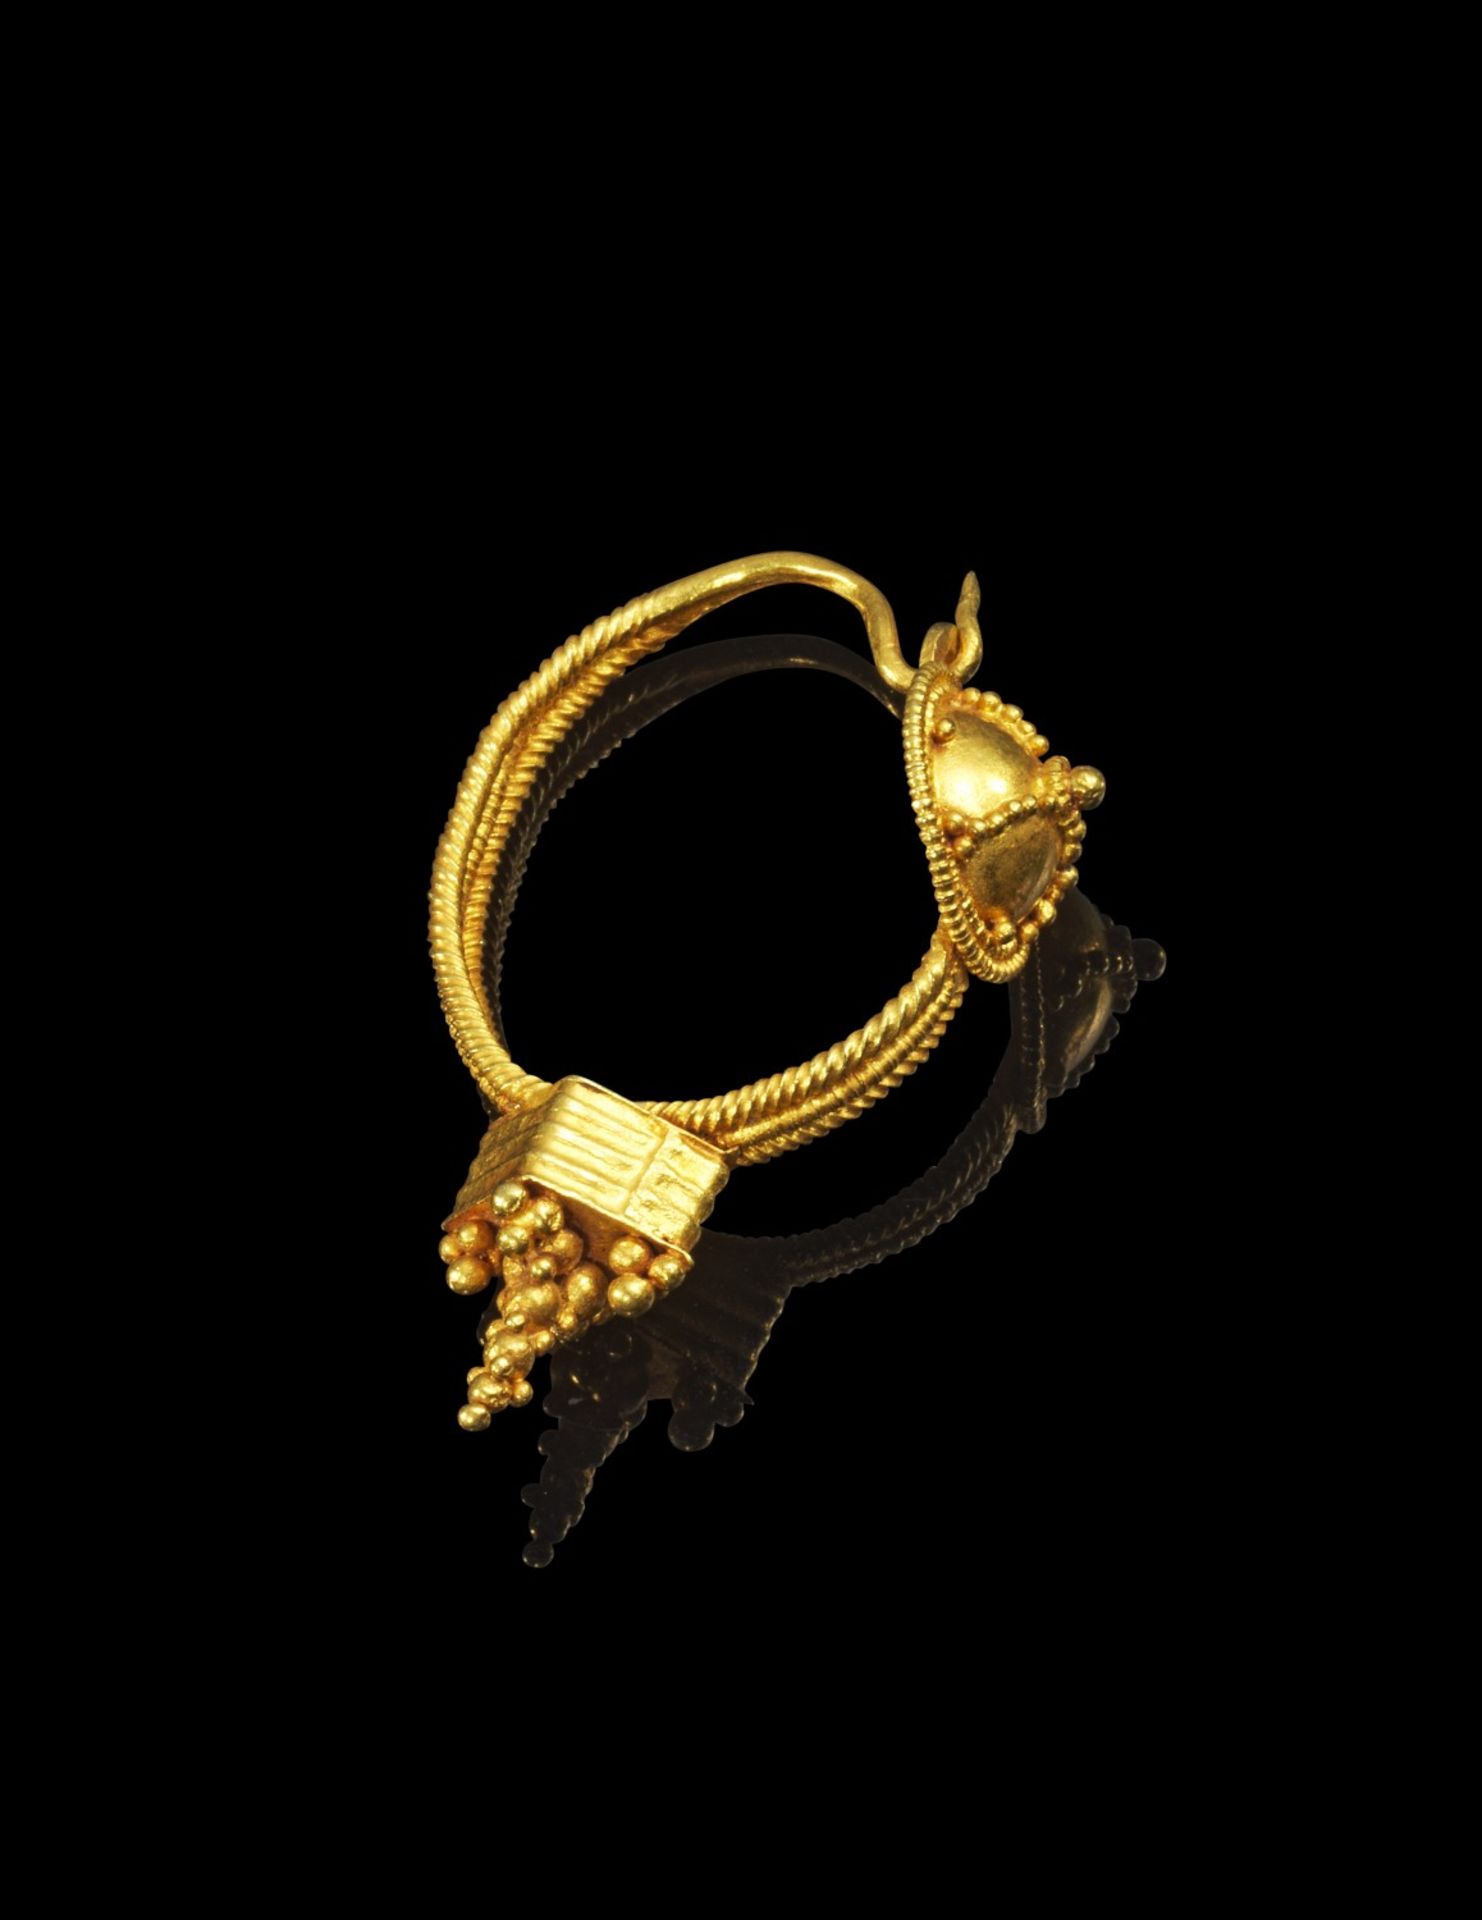 Goldener Ohrring mit Granulatdekor. Römisch, 2. Jh. n. Chr. 3,10g, ø ca. 2cm. Bügelohrring, dessen